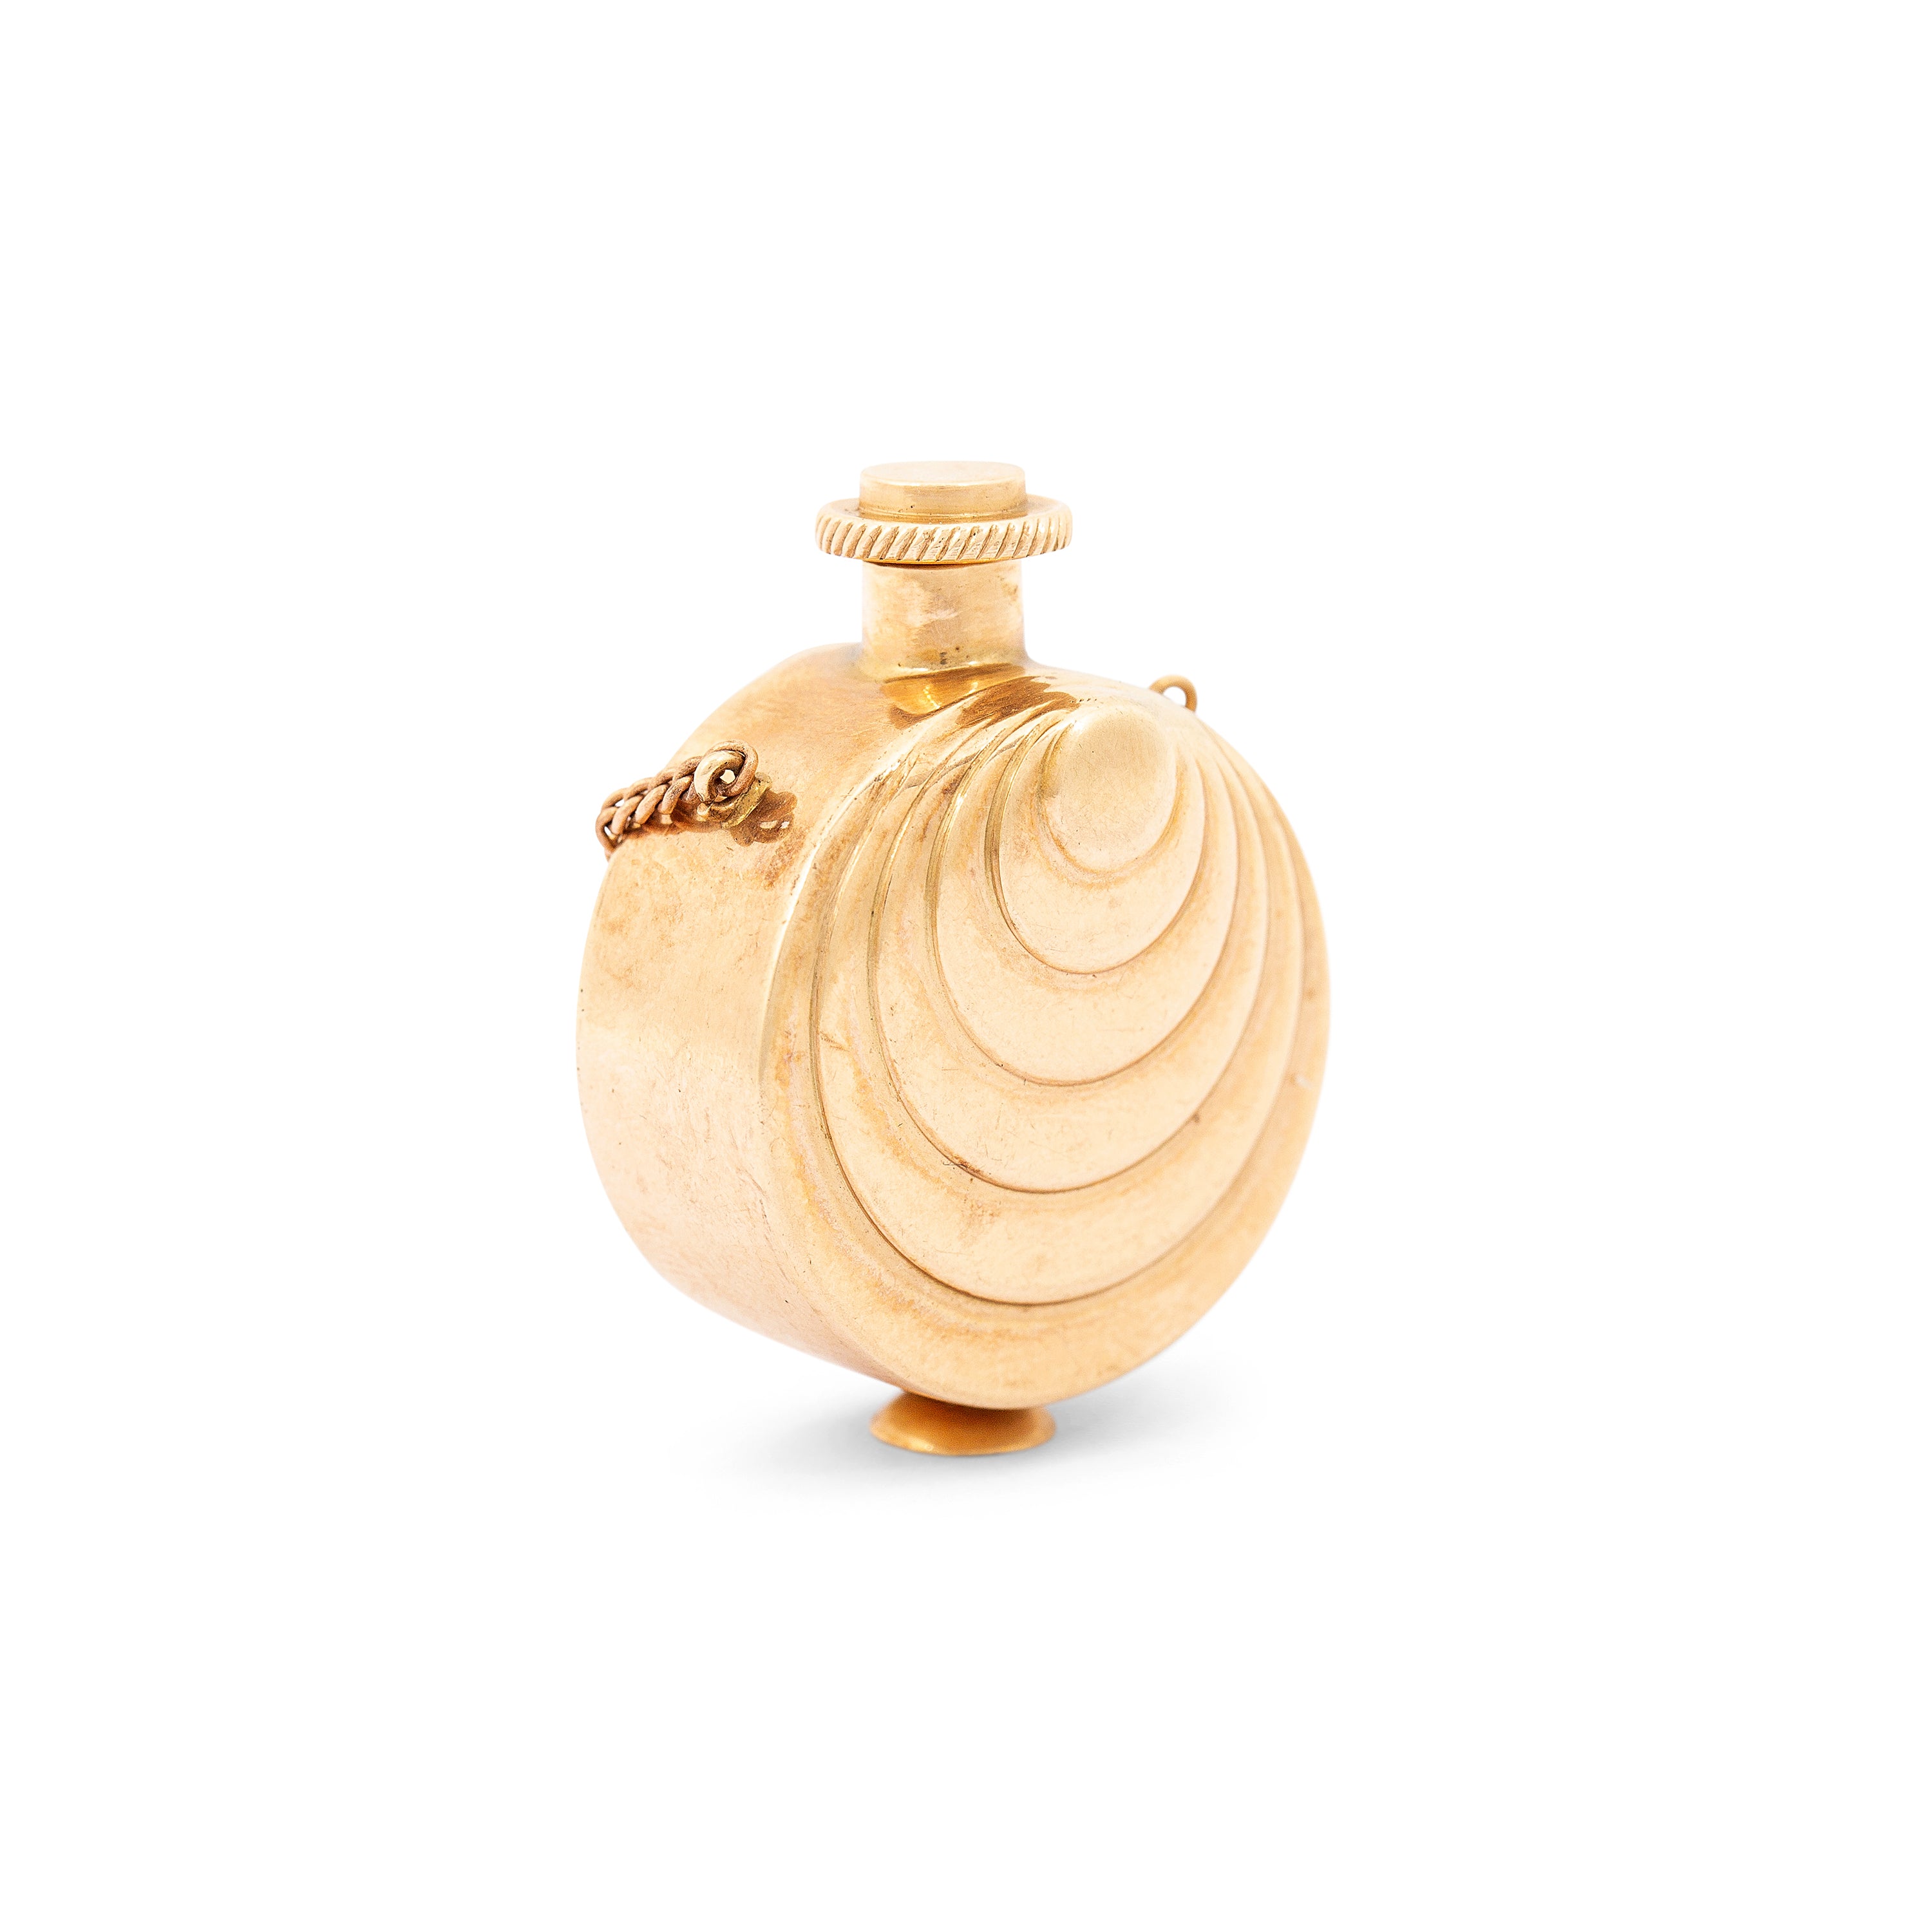 Perfume Bottle 14k Gold Pendant Necklace